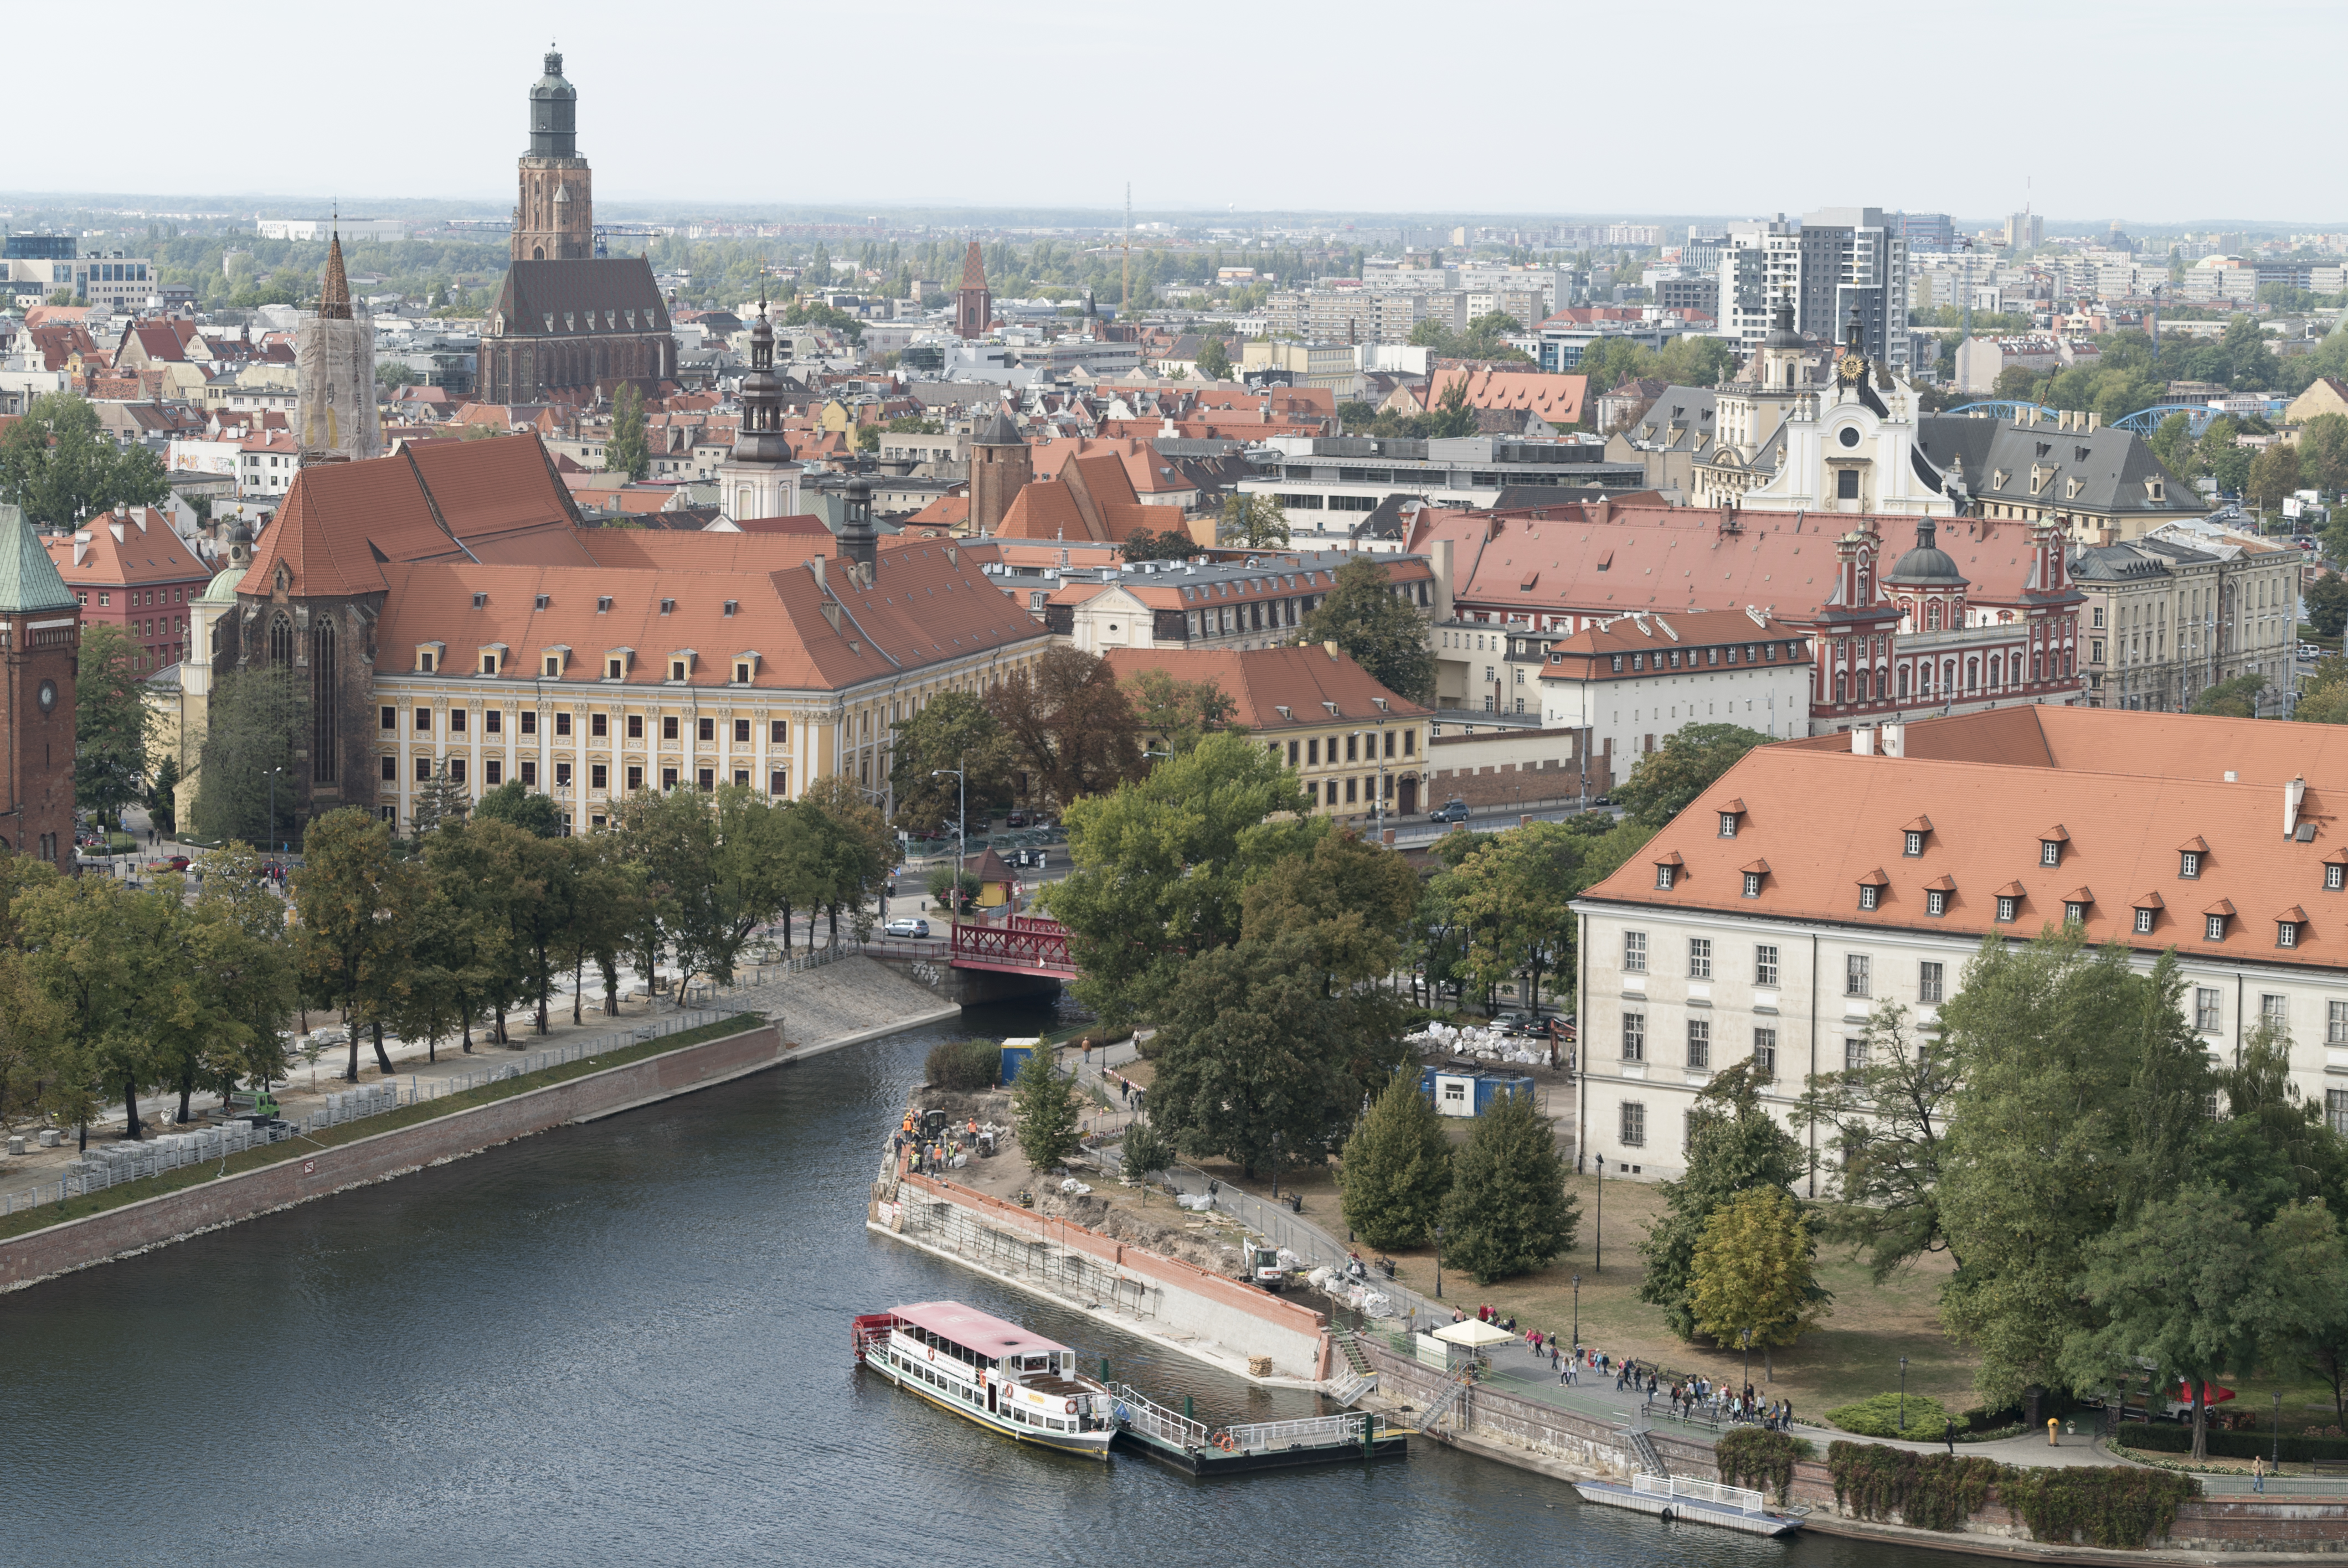 Blick über die Altstadt von Breslau / Wroclaw, 22.9.2015, Foto: Robert B. Fishman